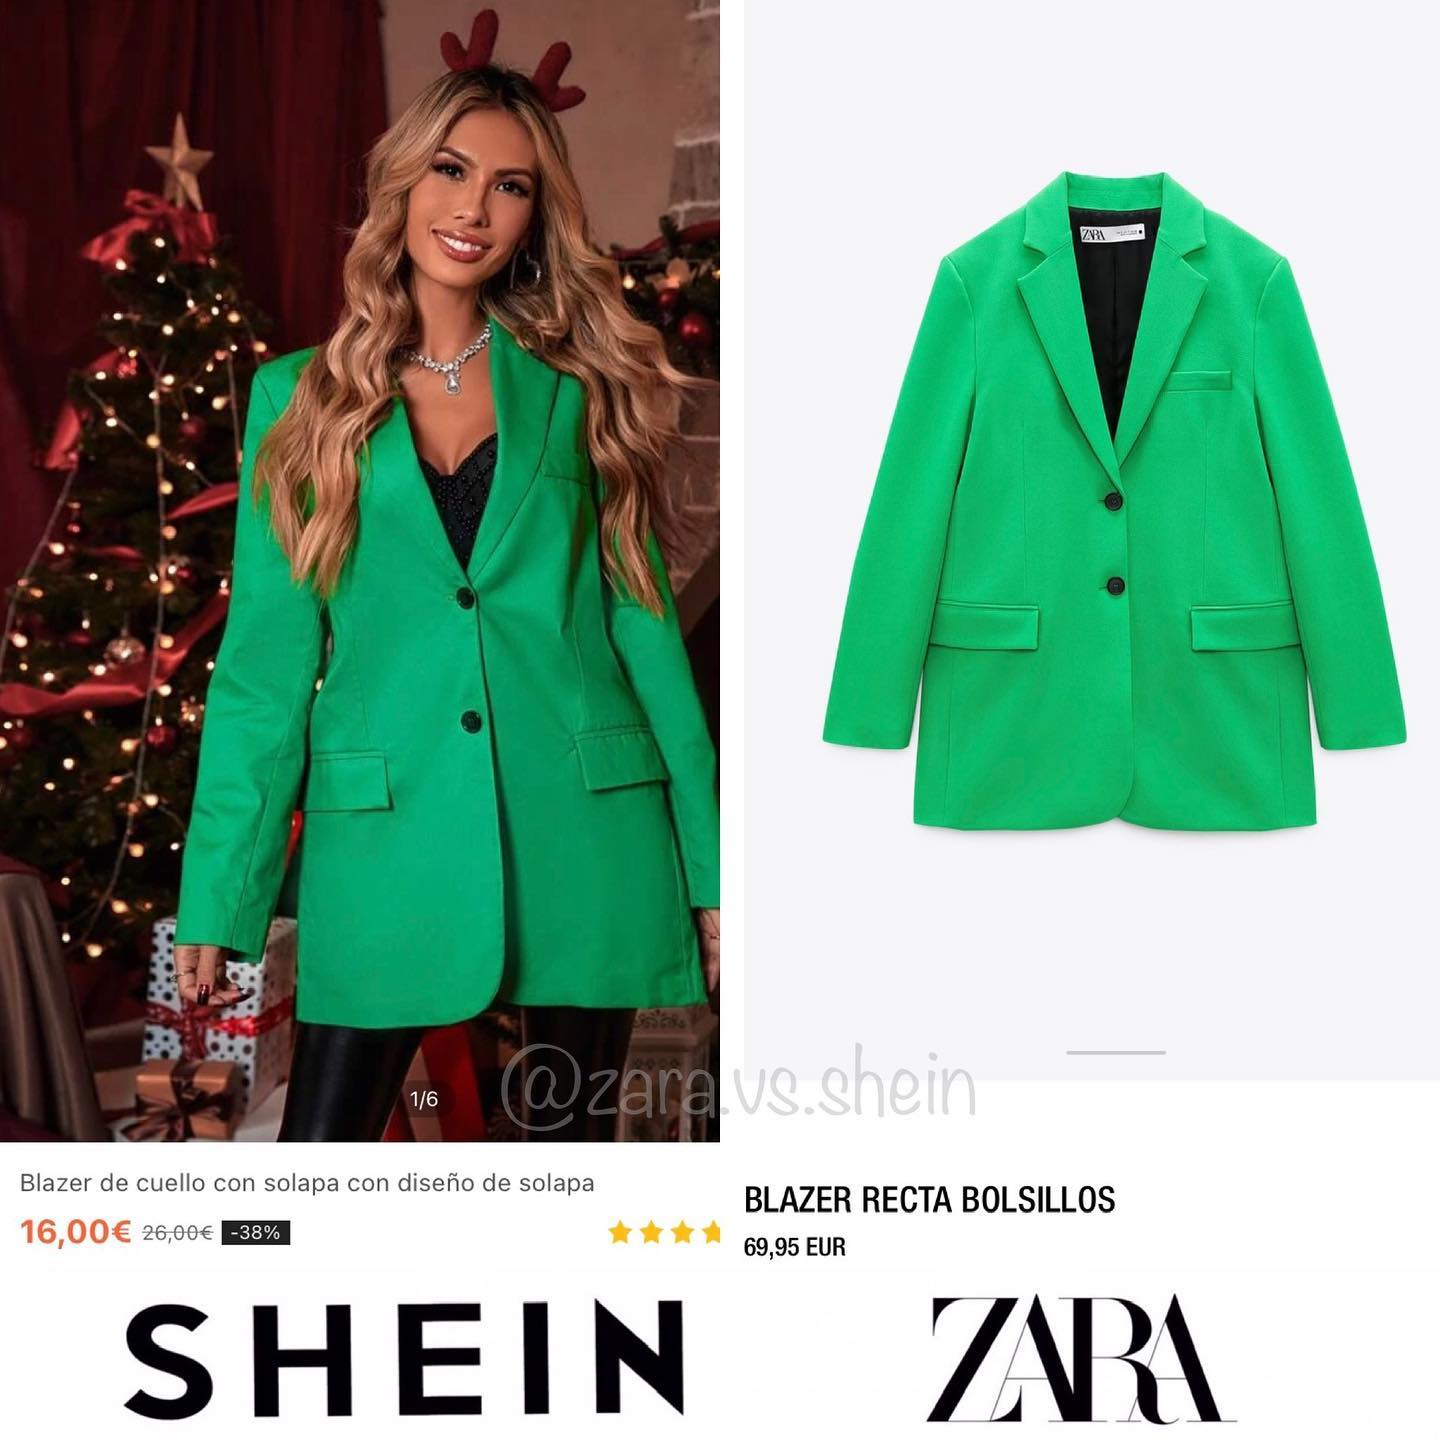 SHEIN clones Zara: Fast fashion copied by super-fast fashion at half the price?  - Photo 5.